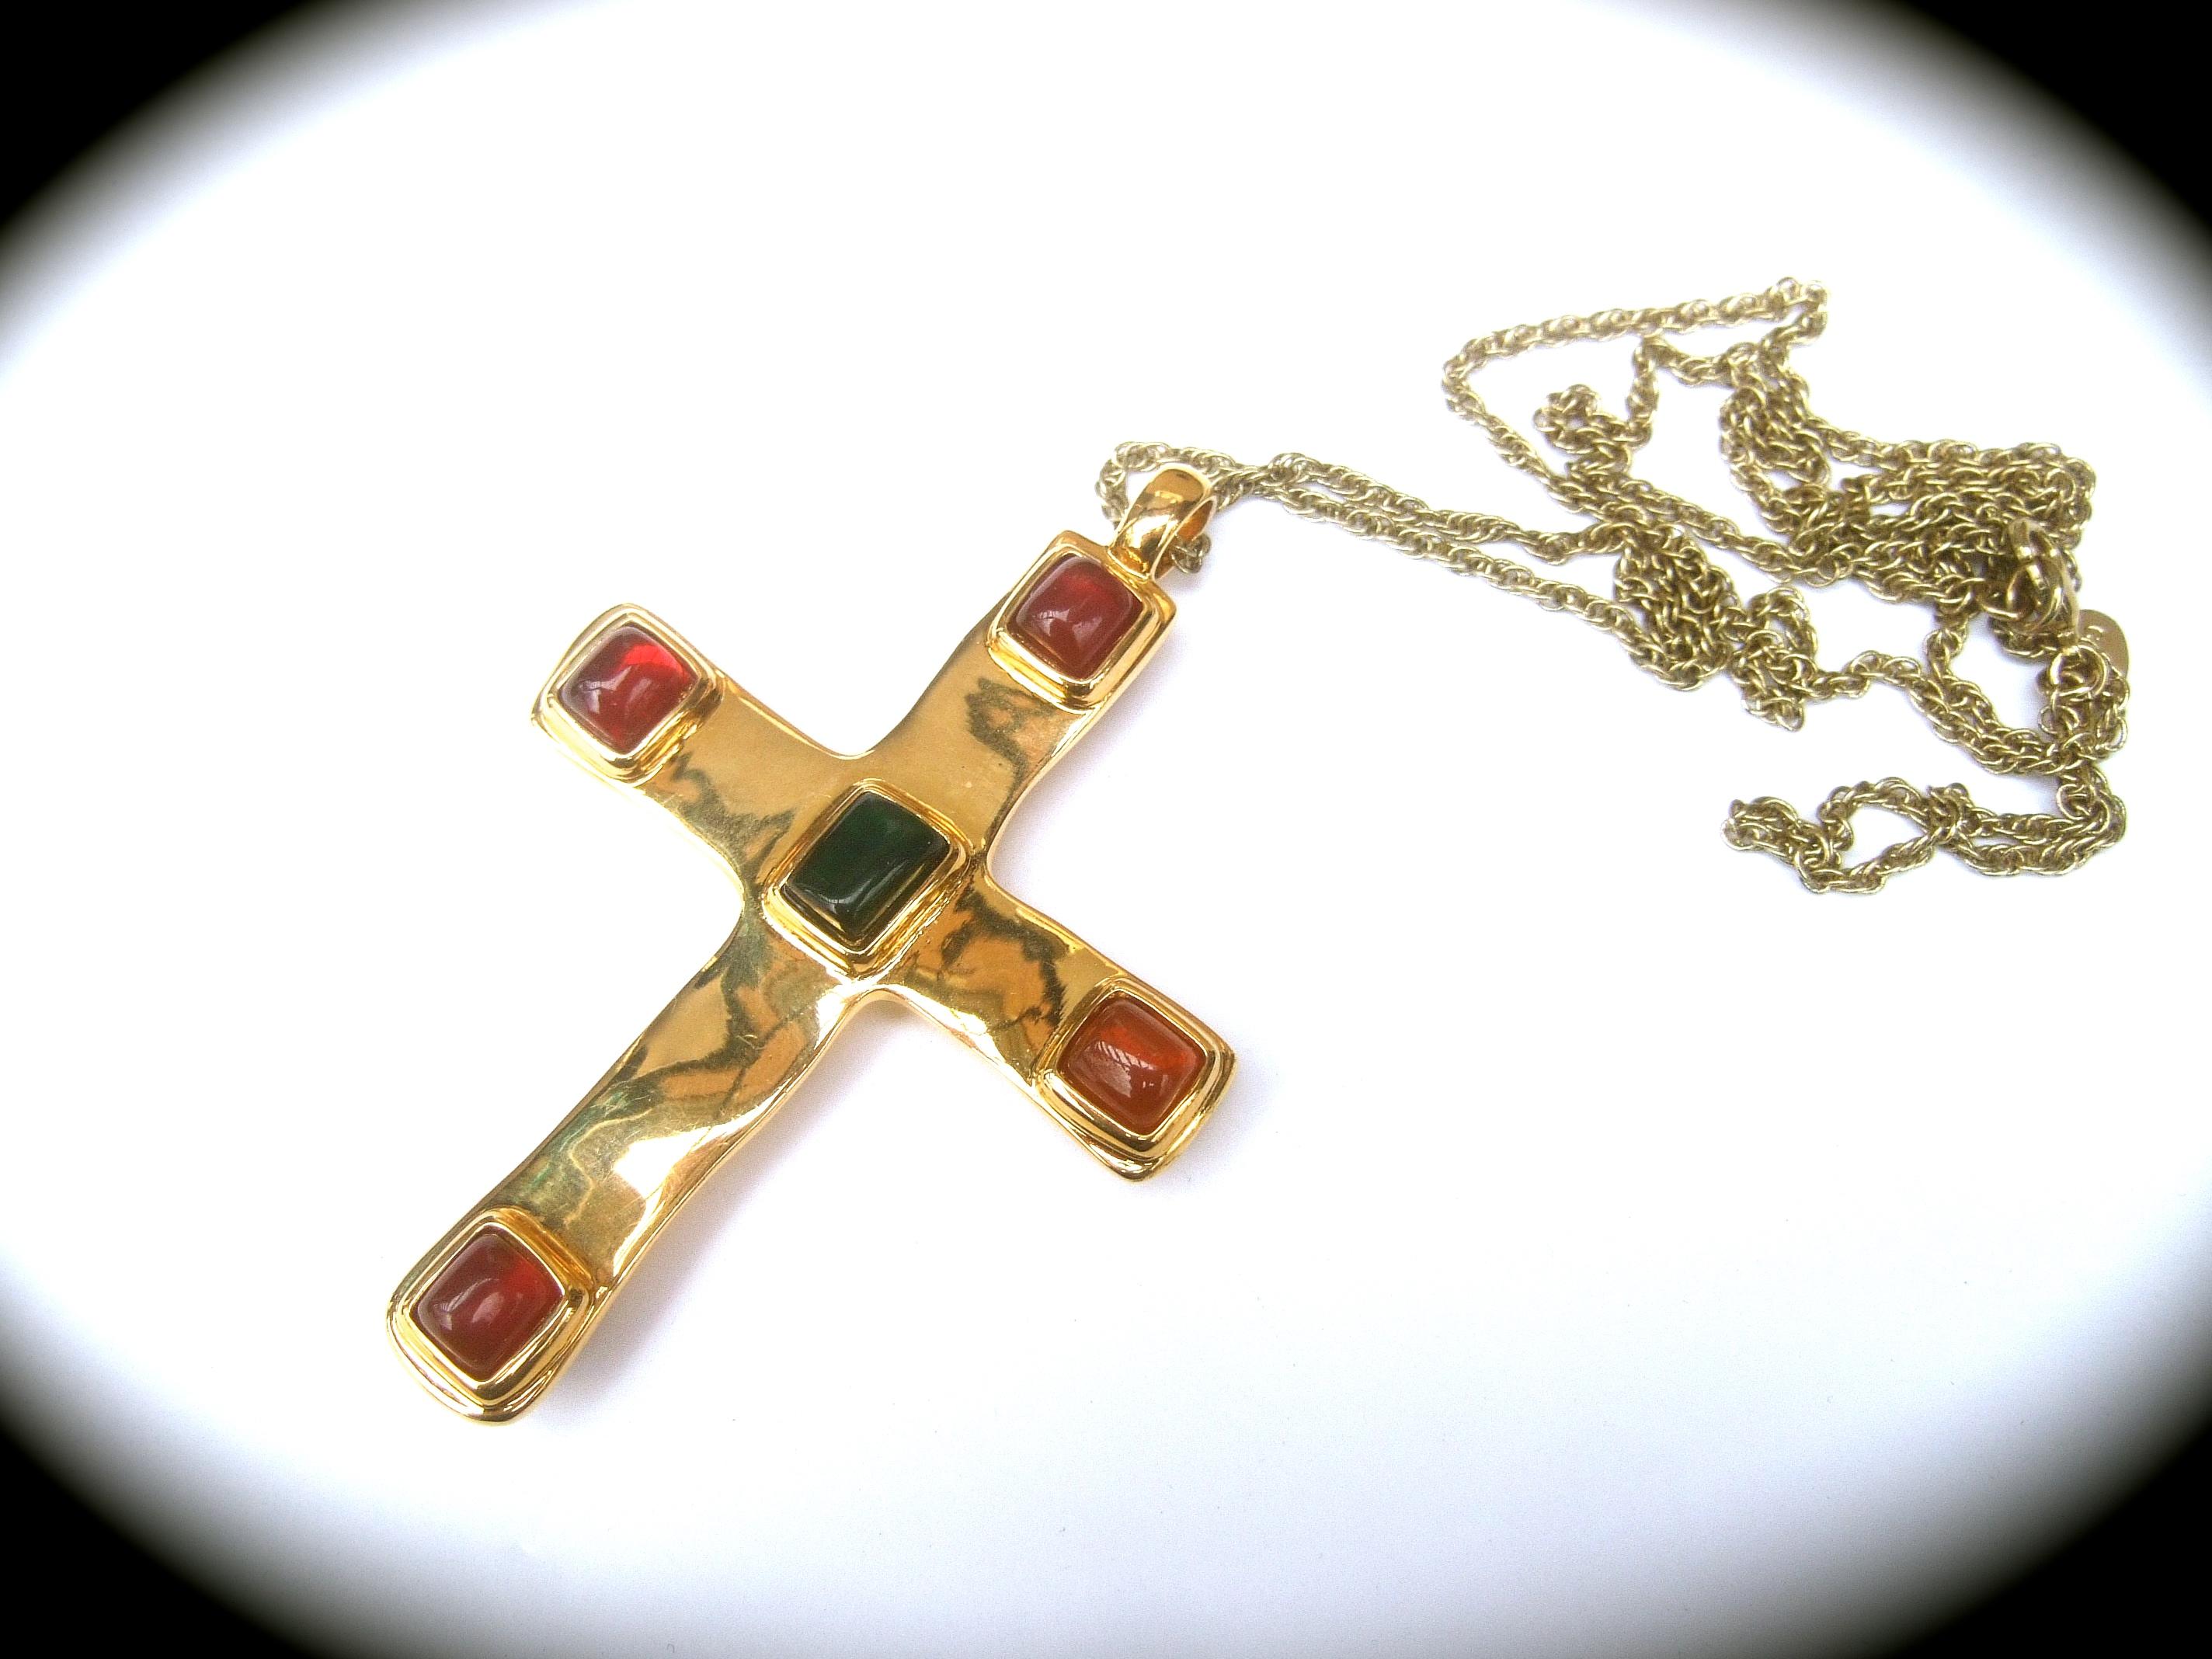 Dellio Large Gilt Metal Poured Resin Cross Pendant Necklace c 1980s For Sale 2